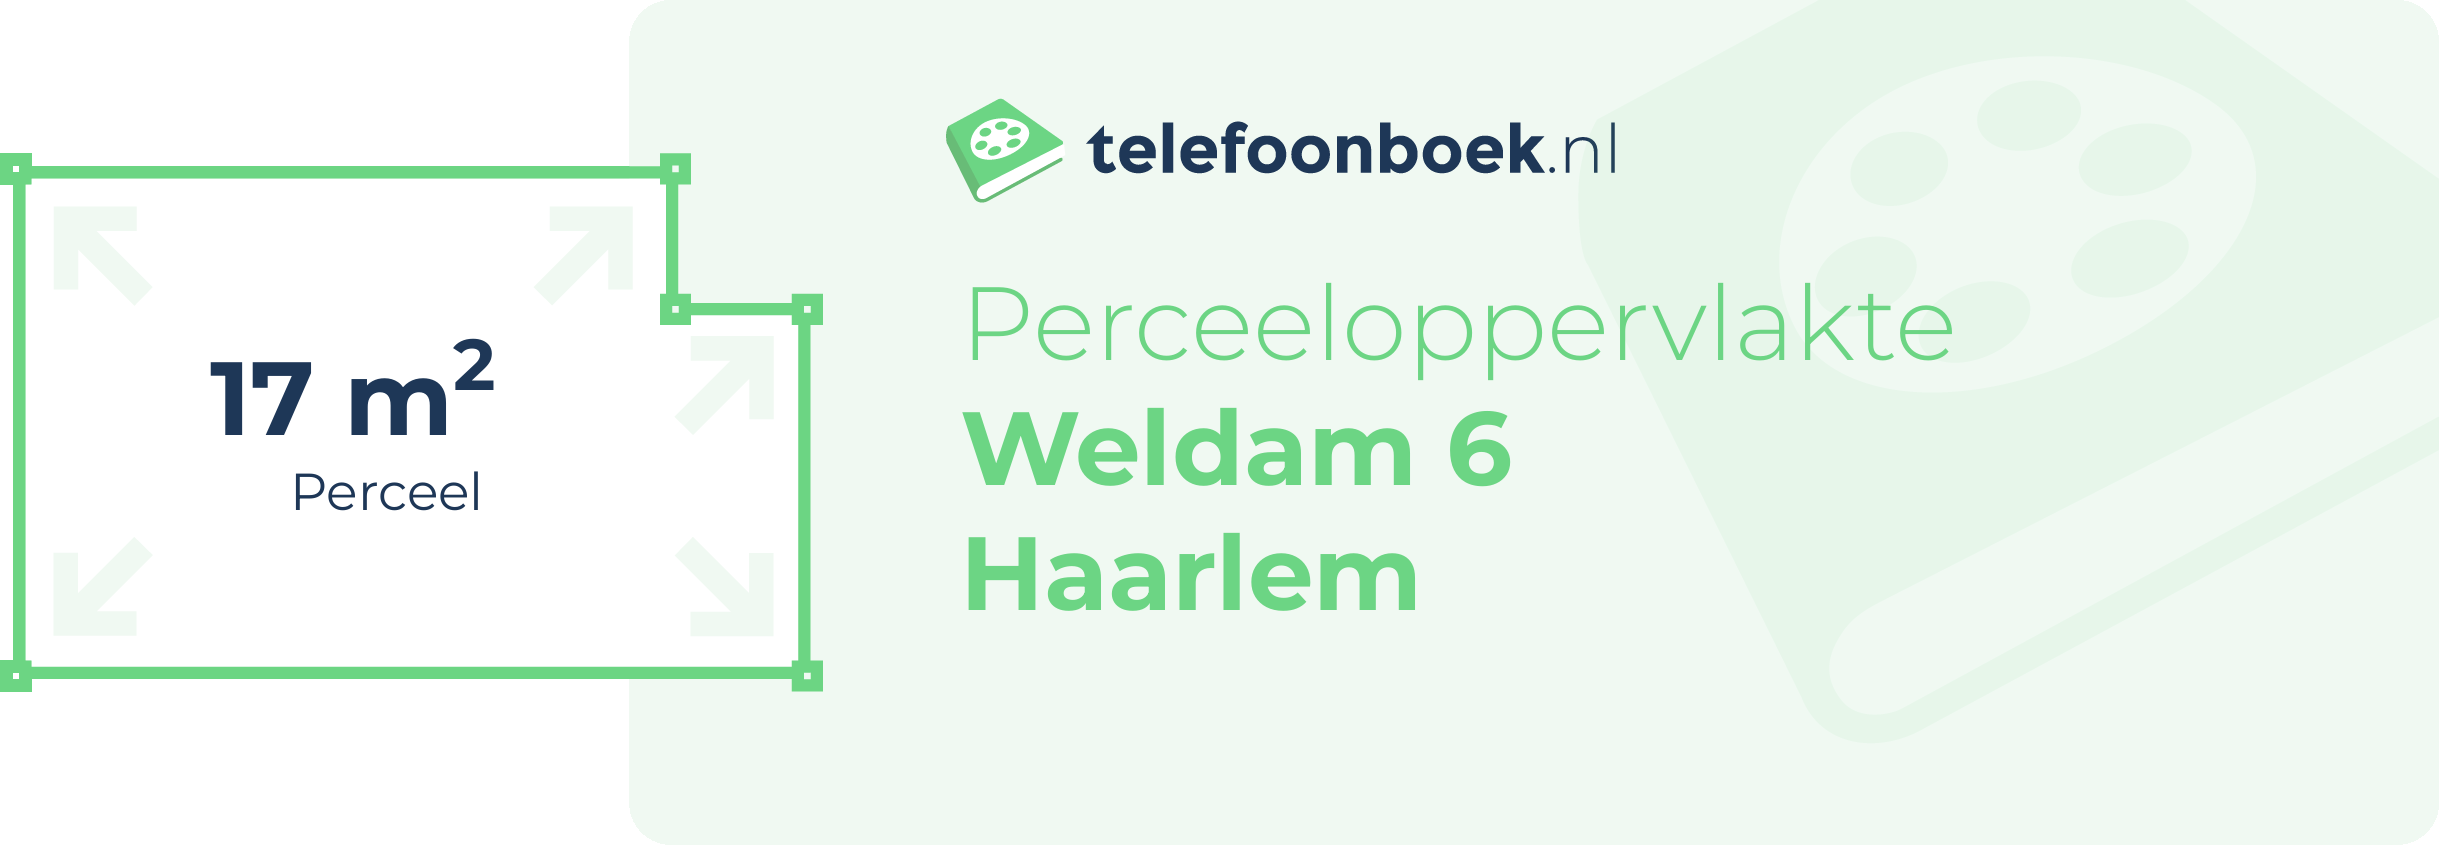 Perceeloppervlakte Weldam 6 Haarlem